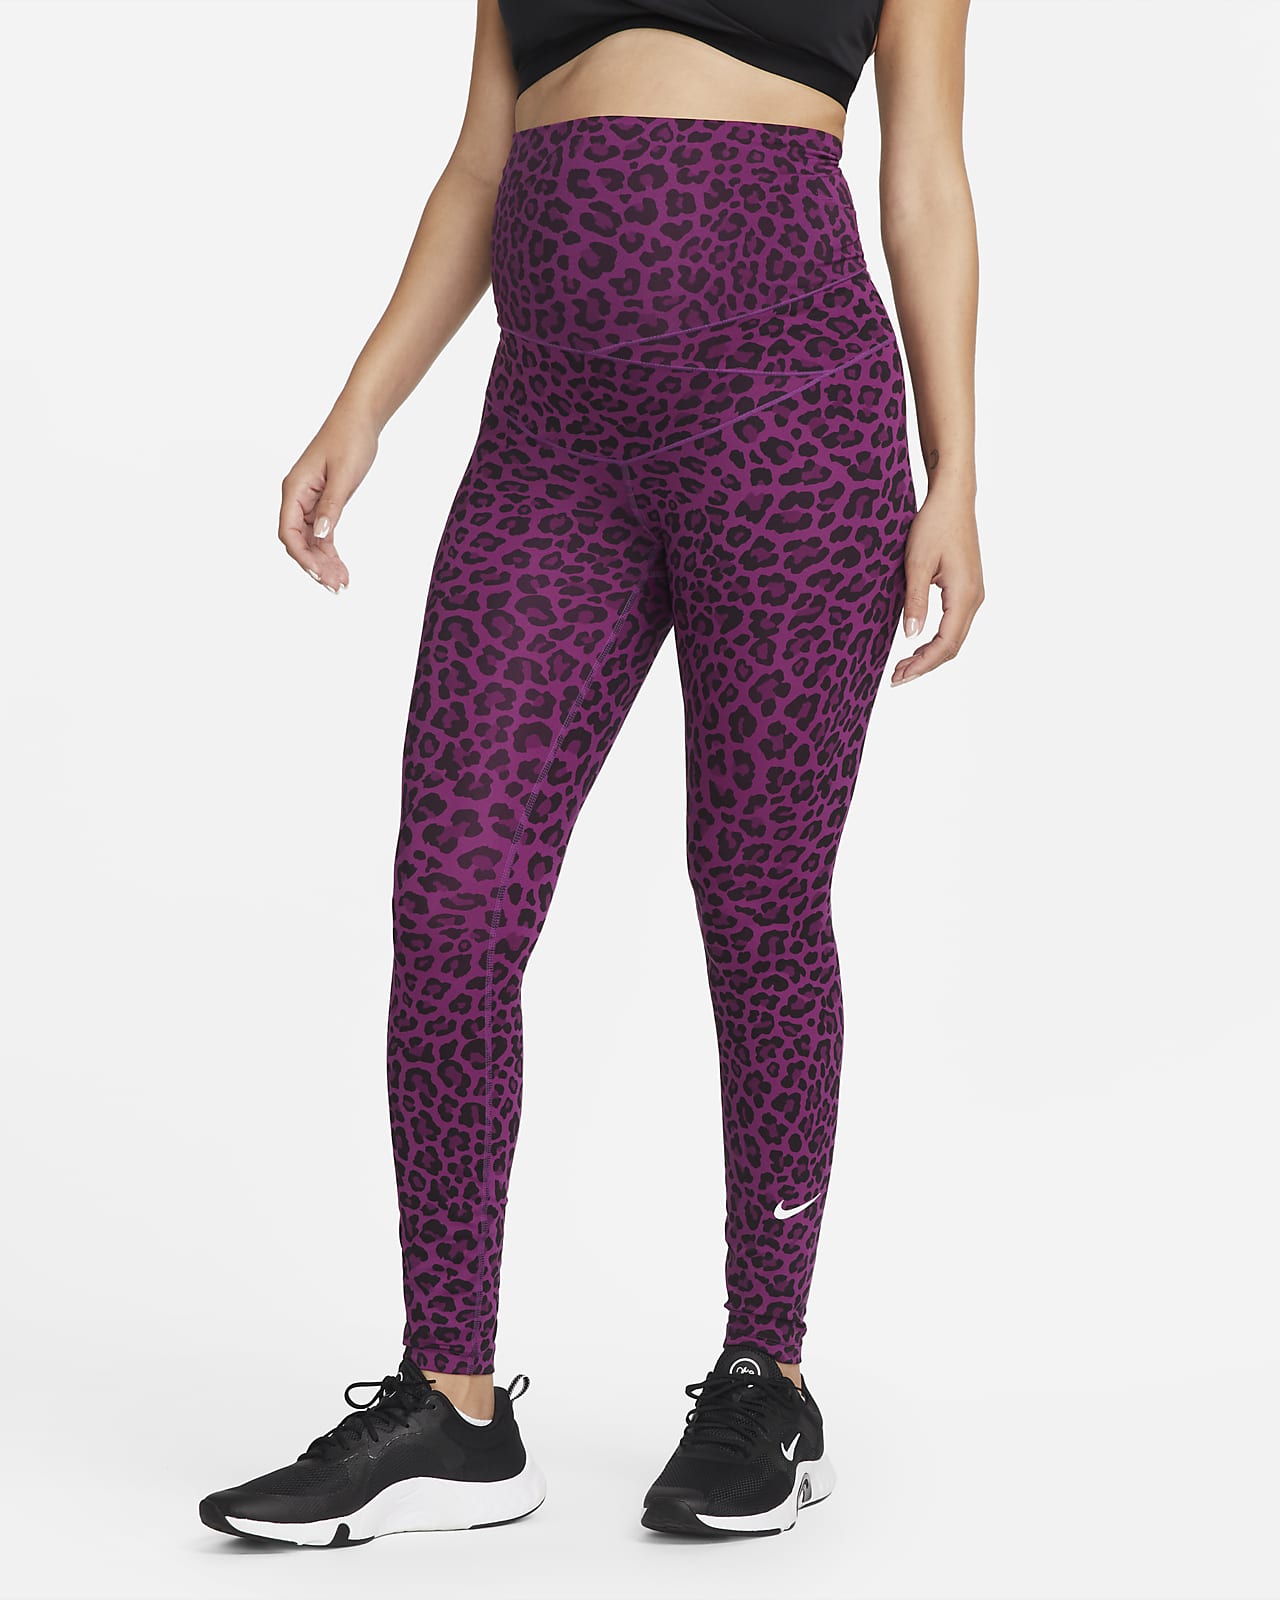 Nike One (M) Women's High-Waisted Leopard Print Leggings (Maternity).  